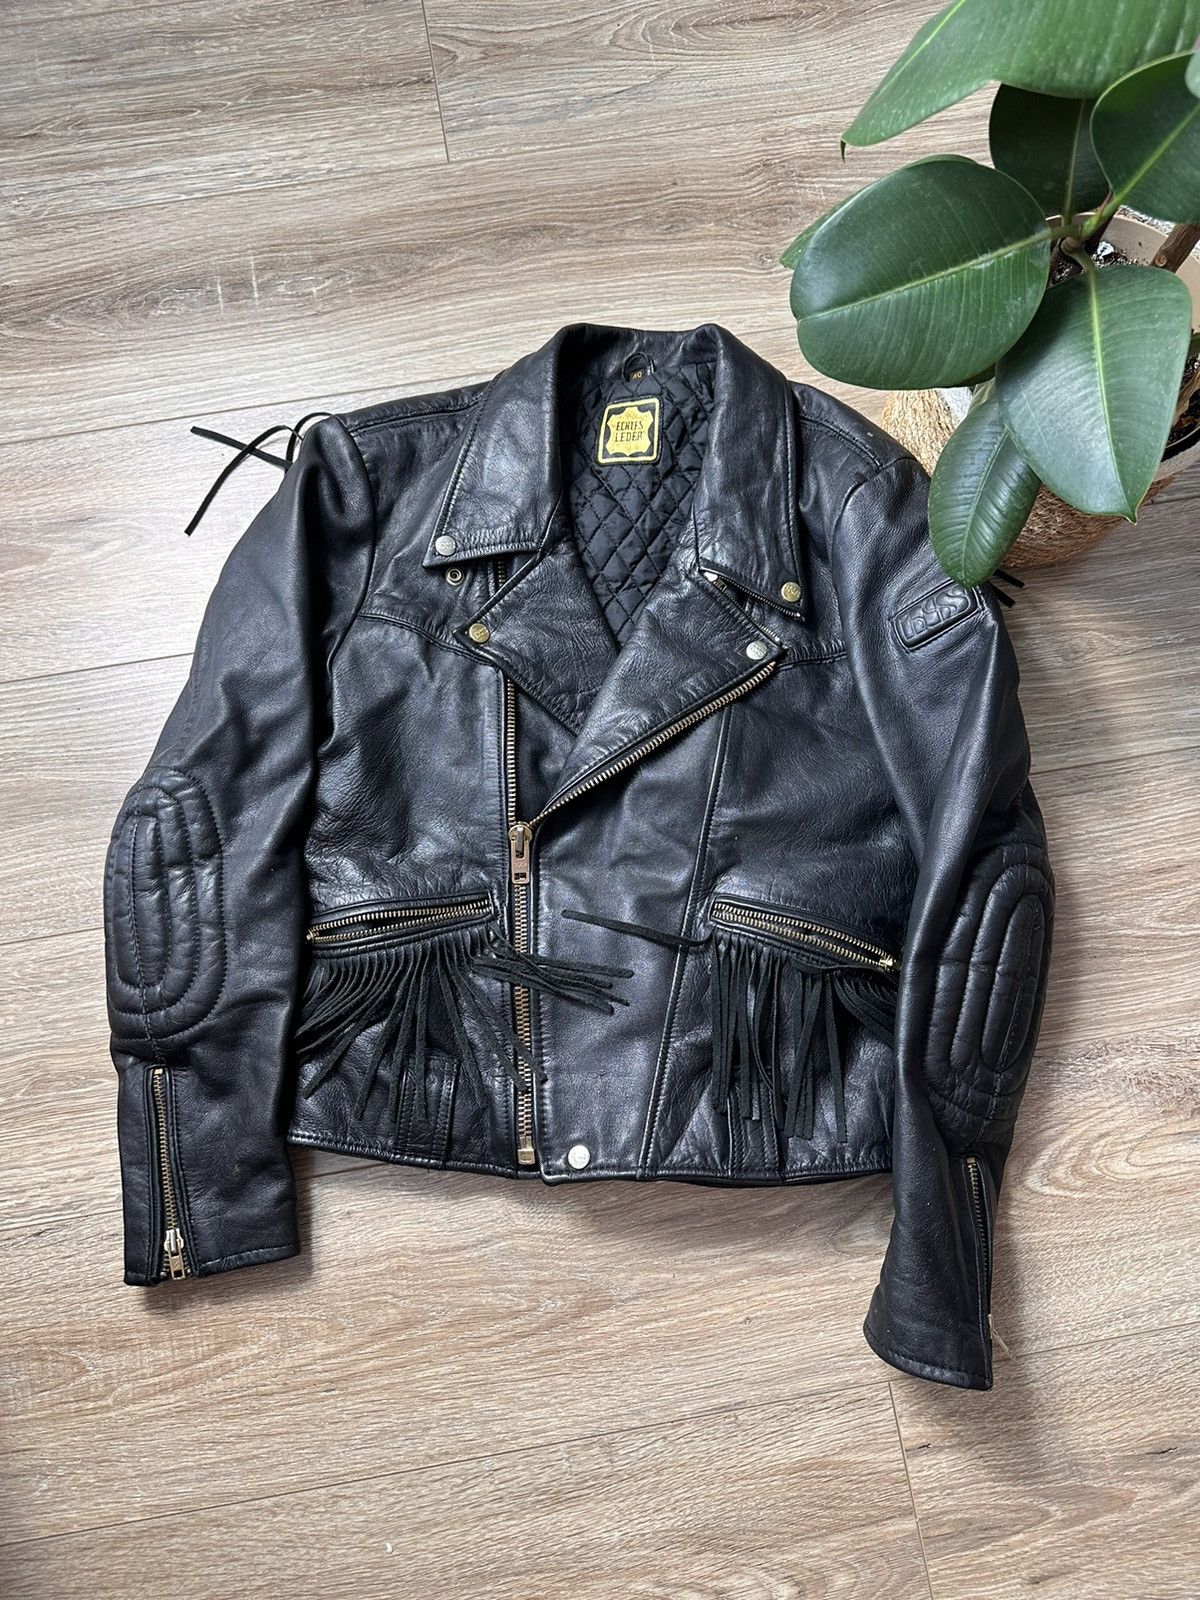 Japanese Brand IXS Leather Jacket Vintage Racing Black | Grailed